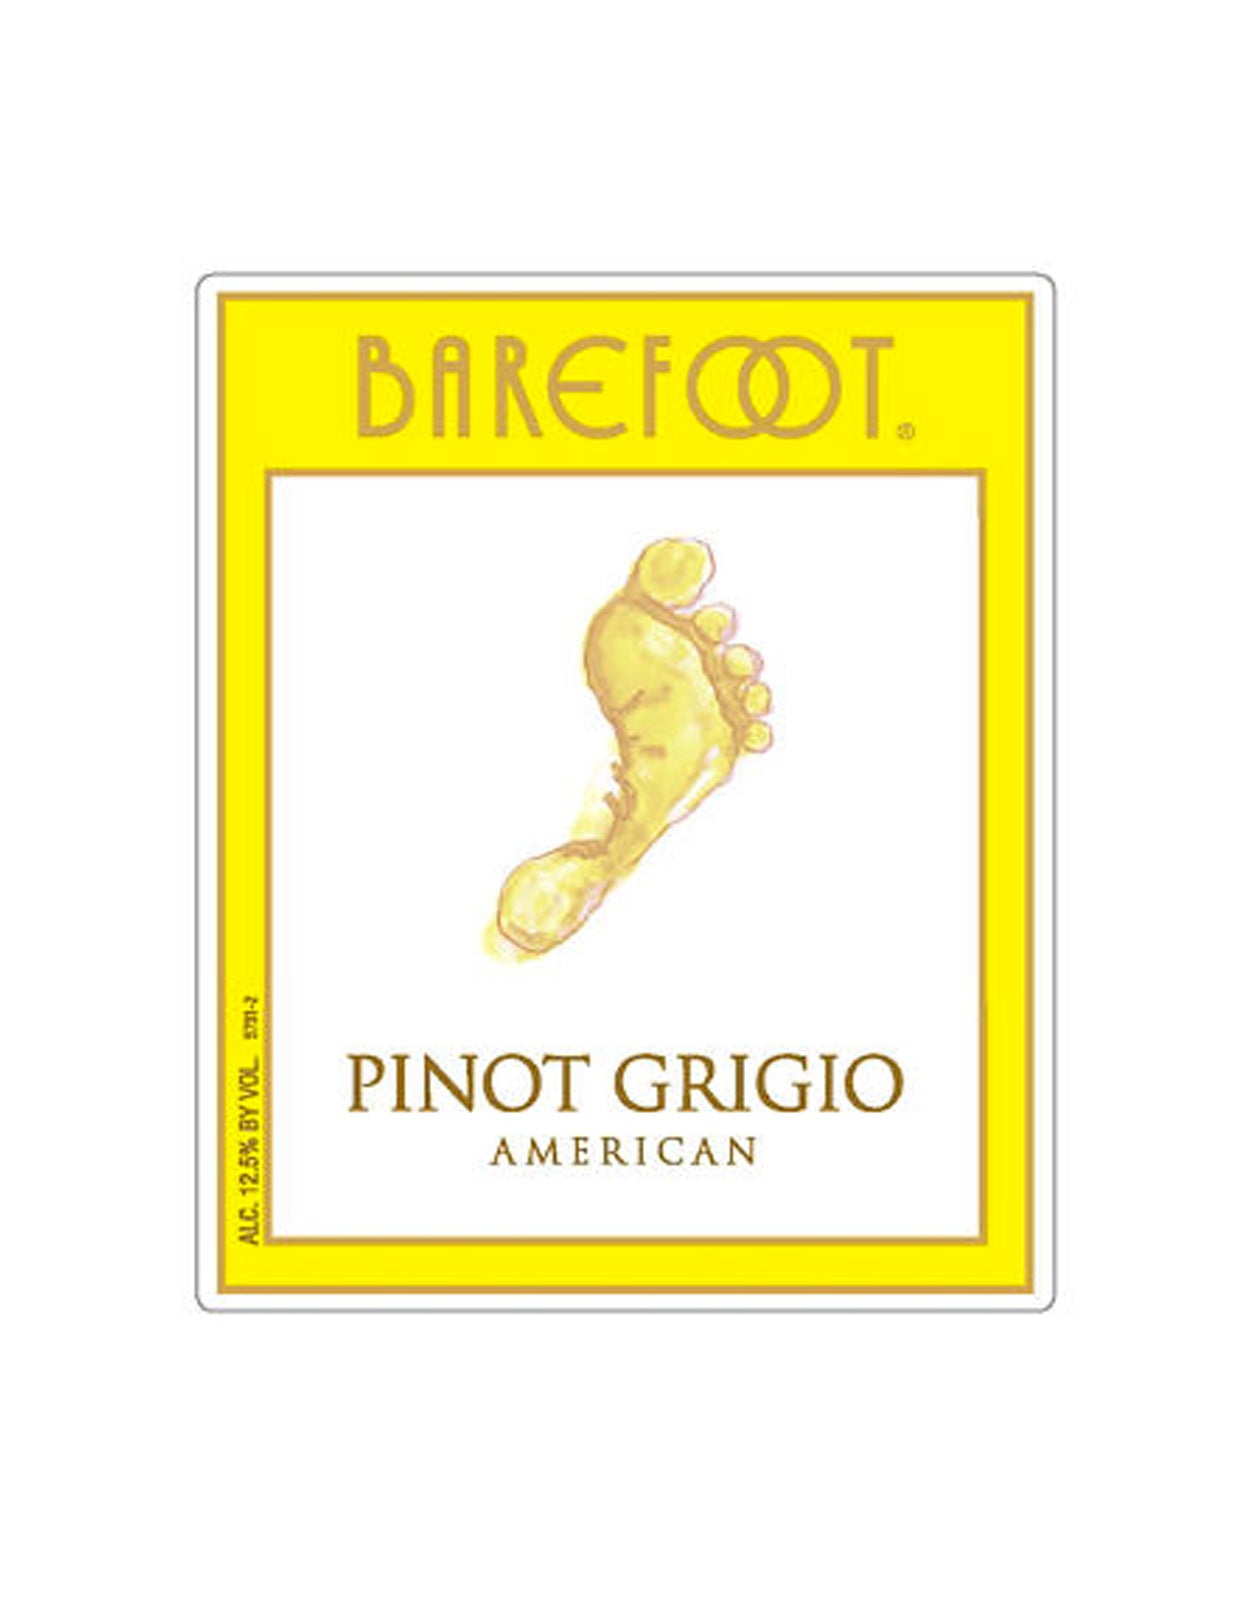 Barefoot Pinot Grigio - 3 Litre Box